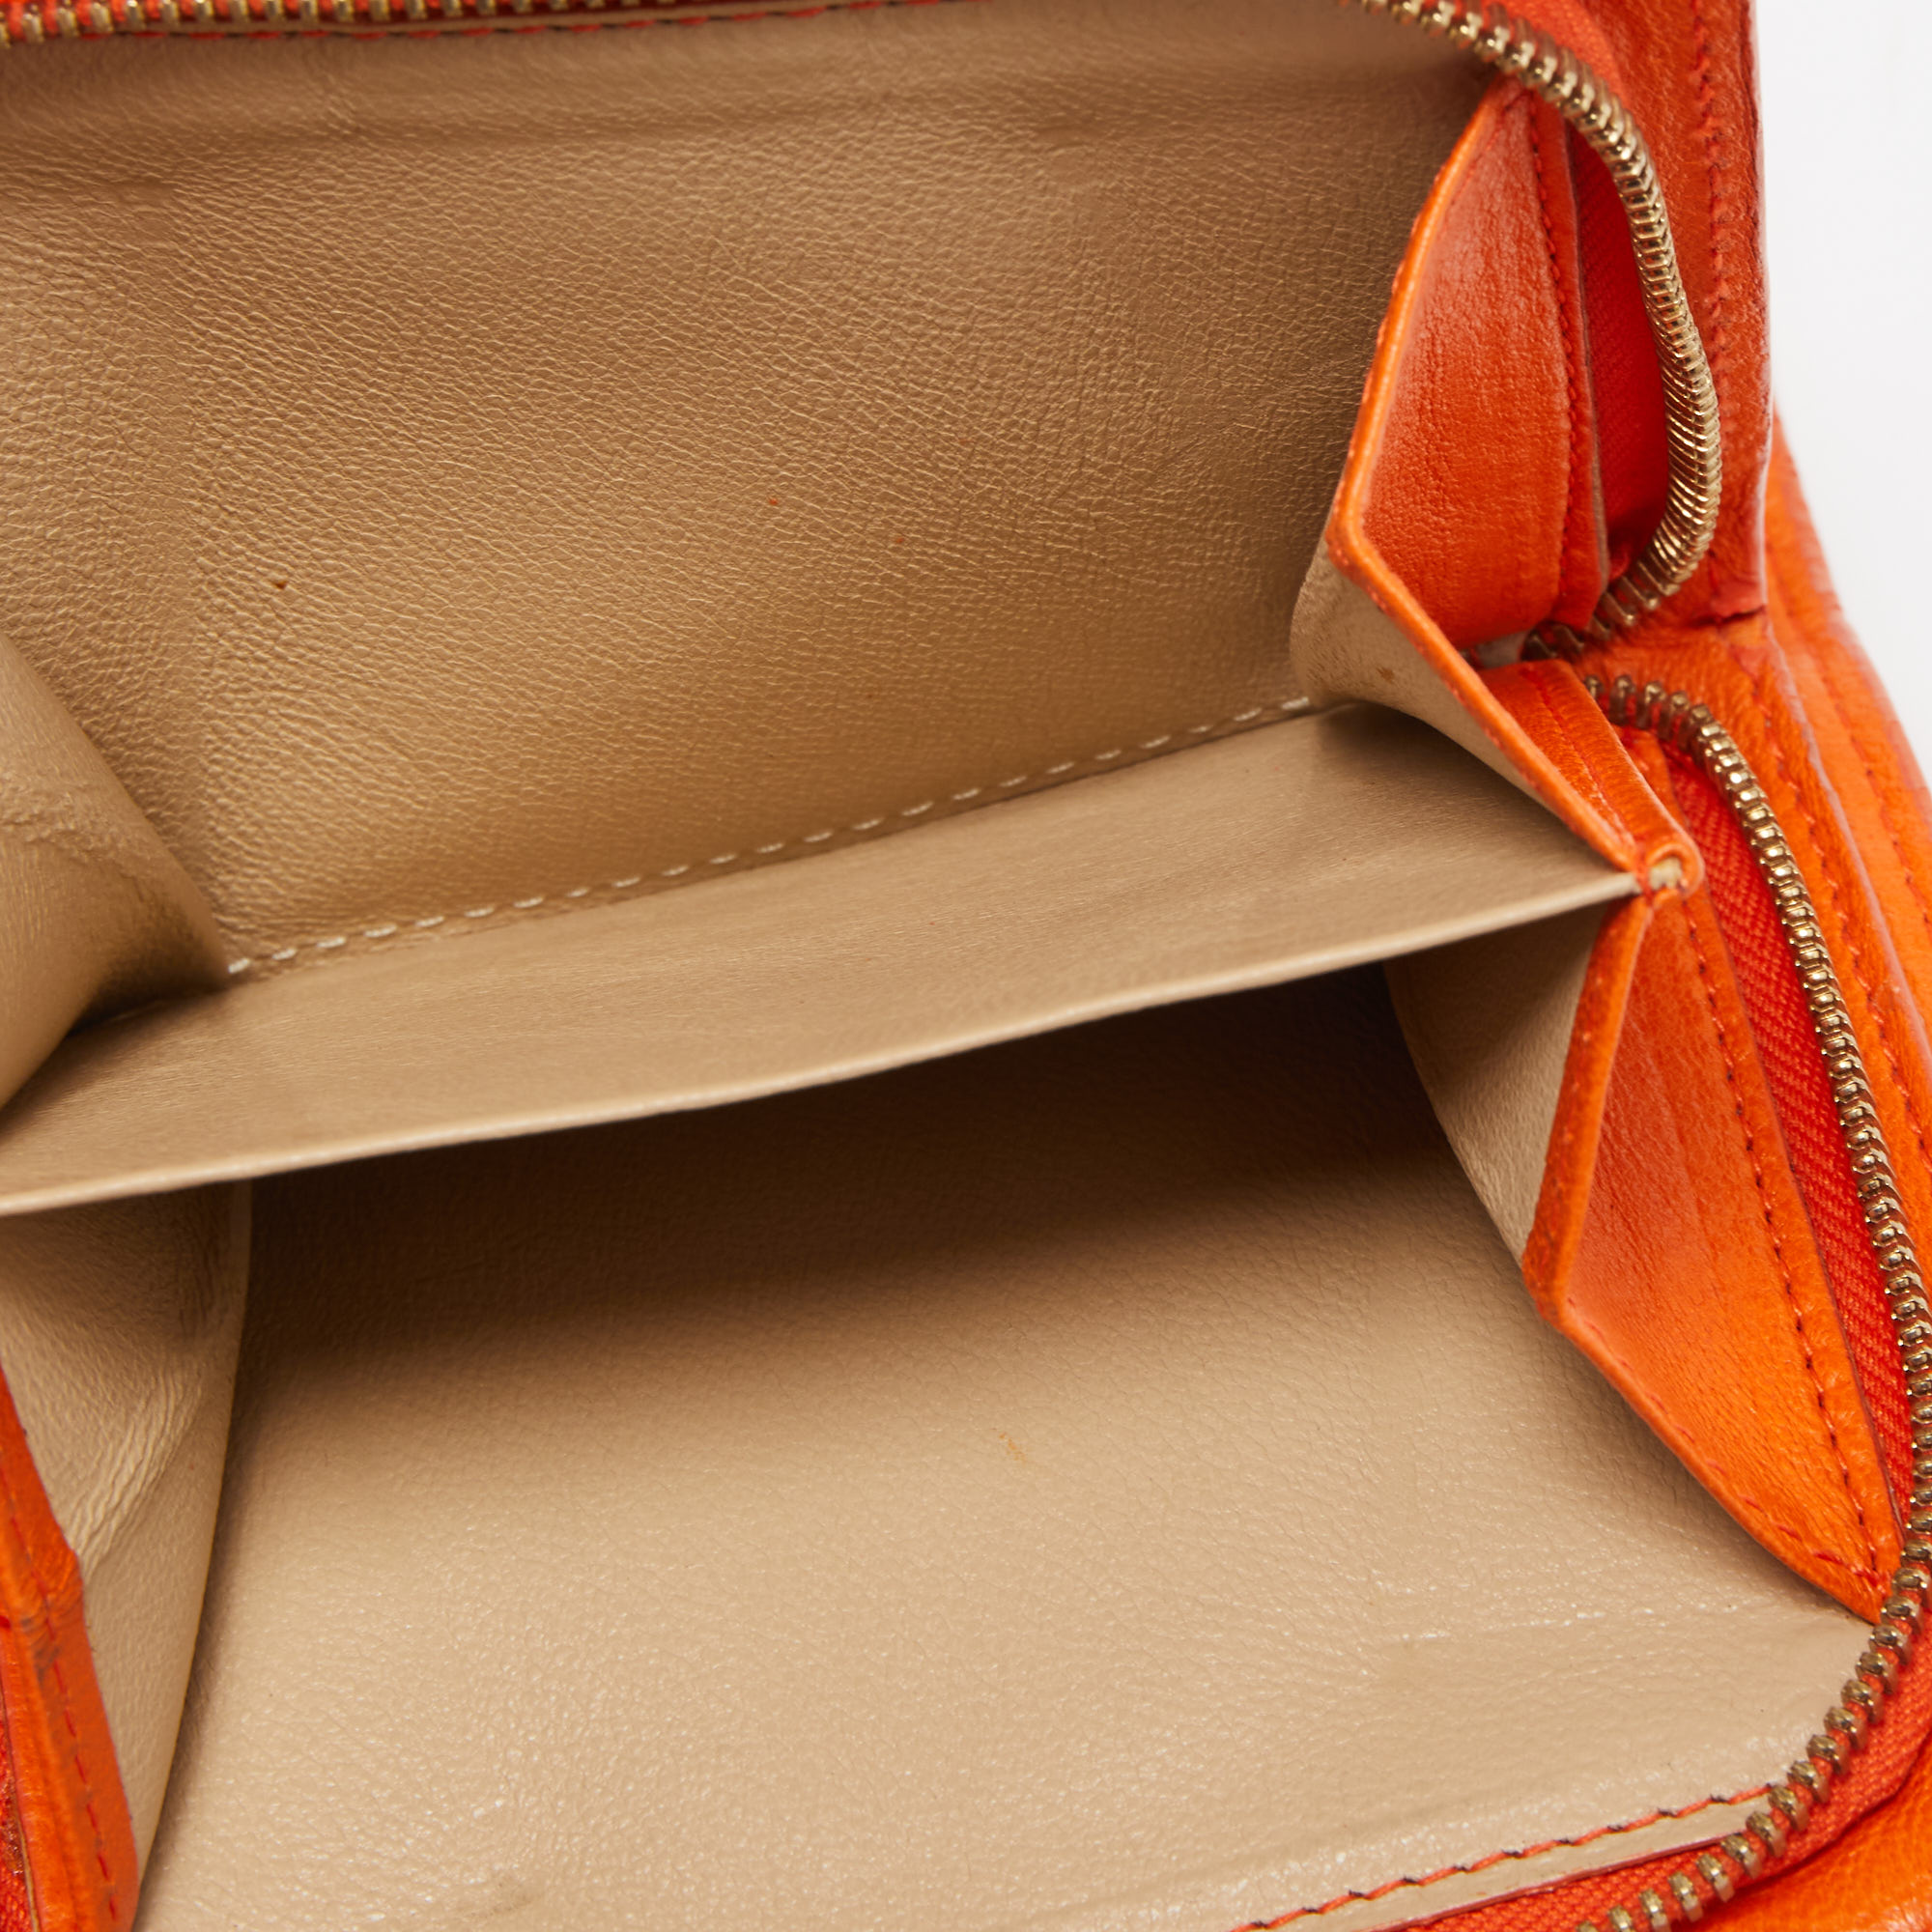 Bottega Veneta Orange Intrecciato Leather Bifold Zip Wallet